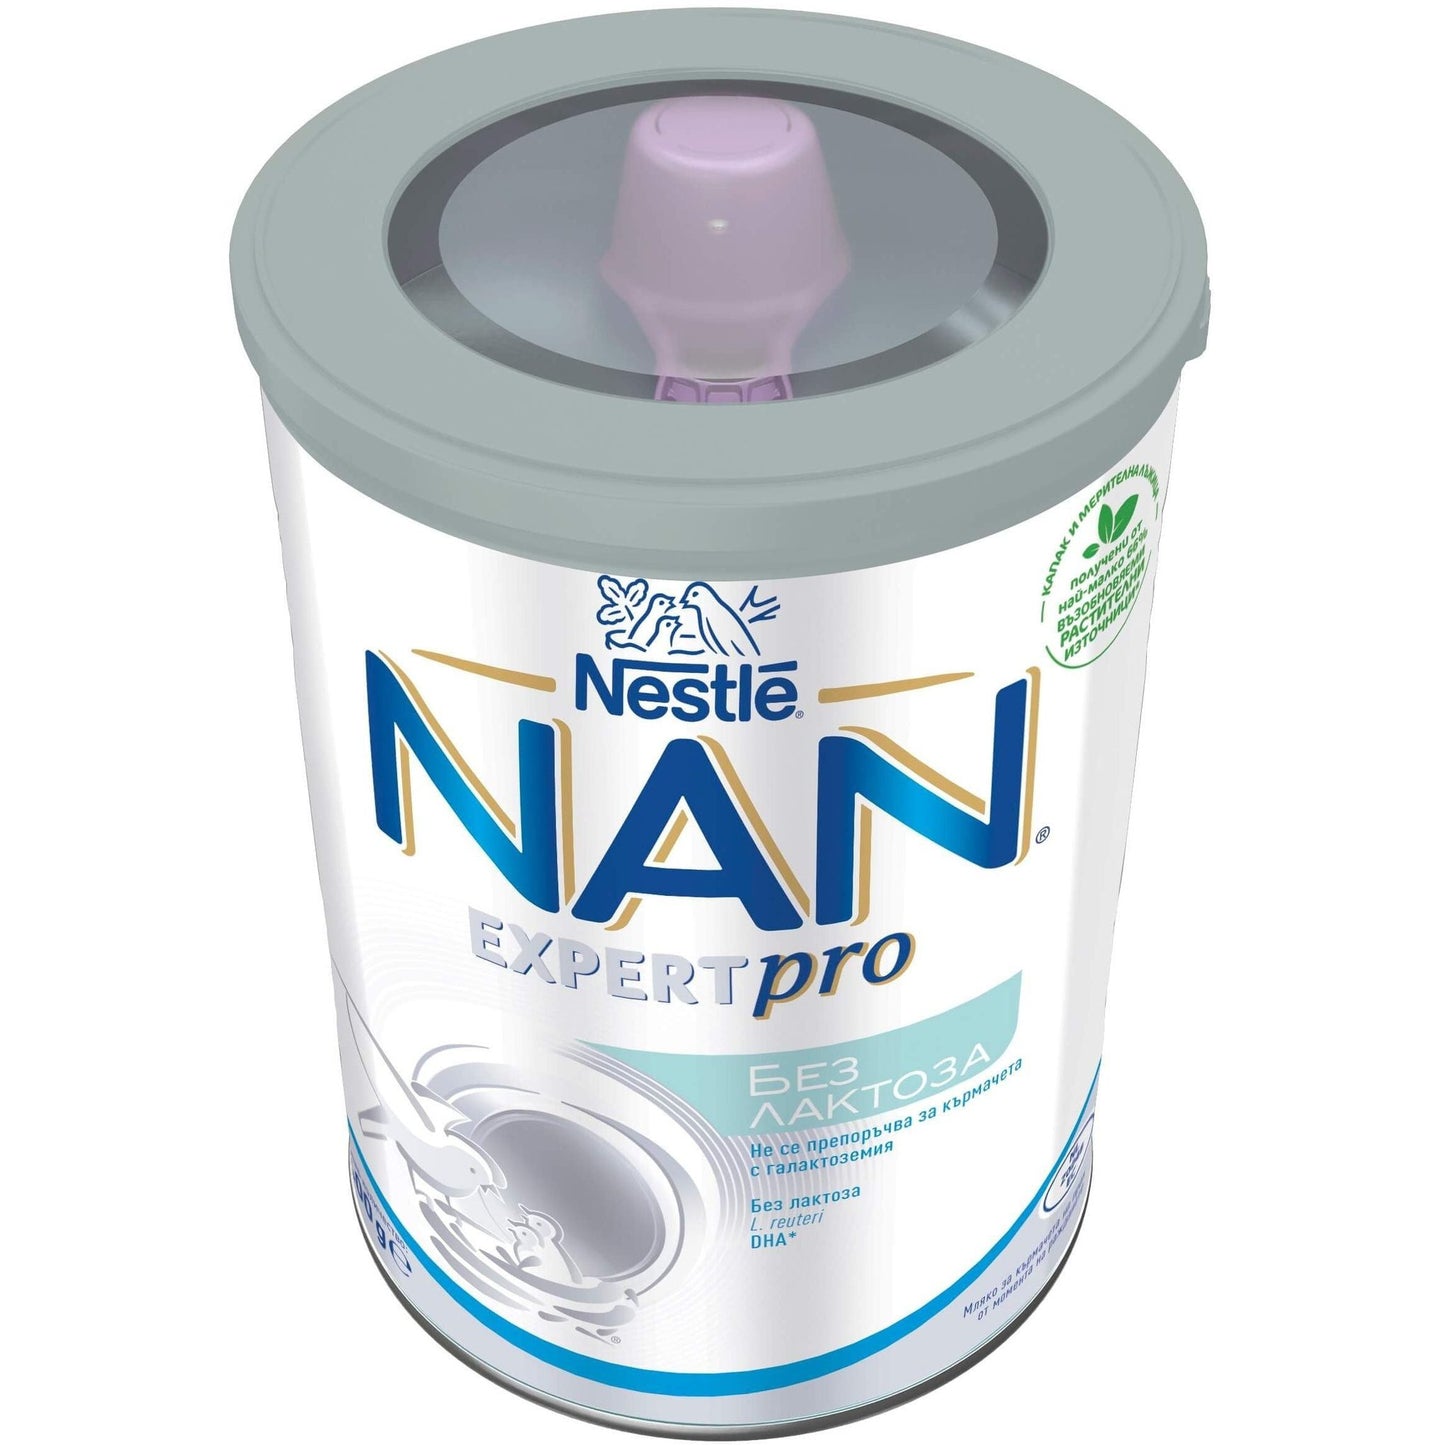 Nestle NAN EXPERT PRO БЕЗ ЛАКТОЗА Мляко за кърмач. 0+м 400г valinokids